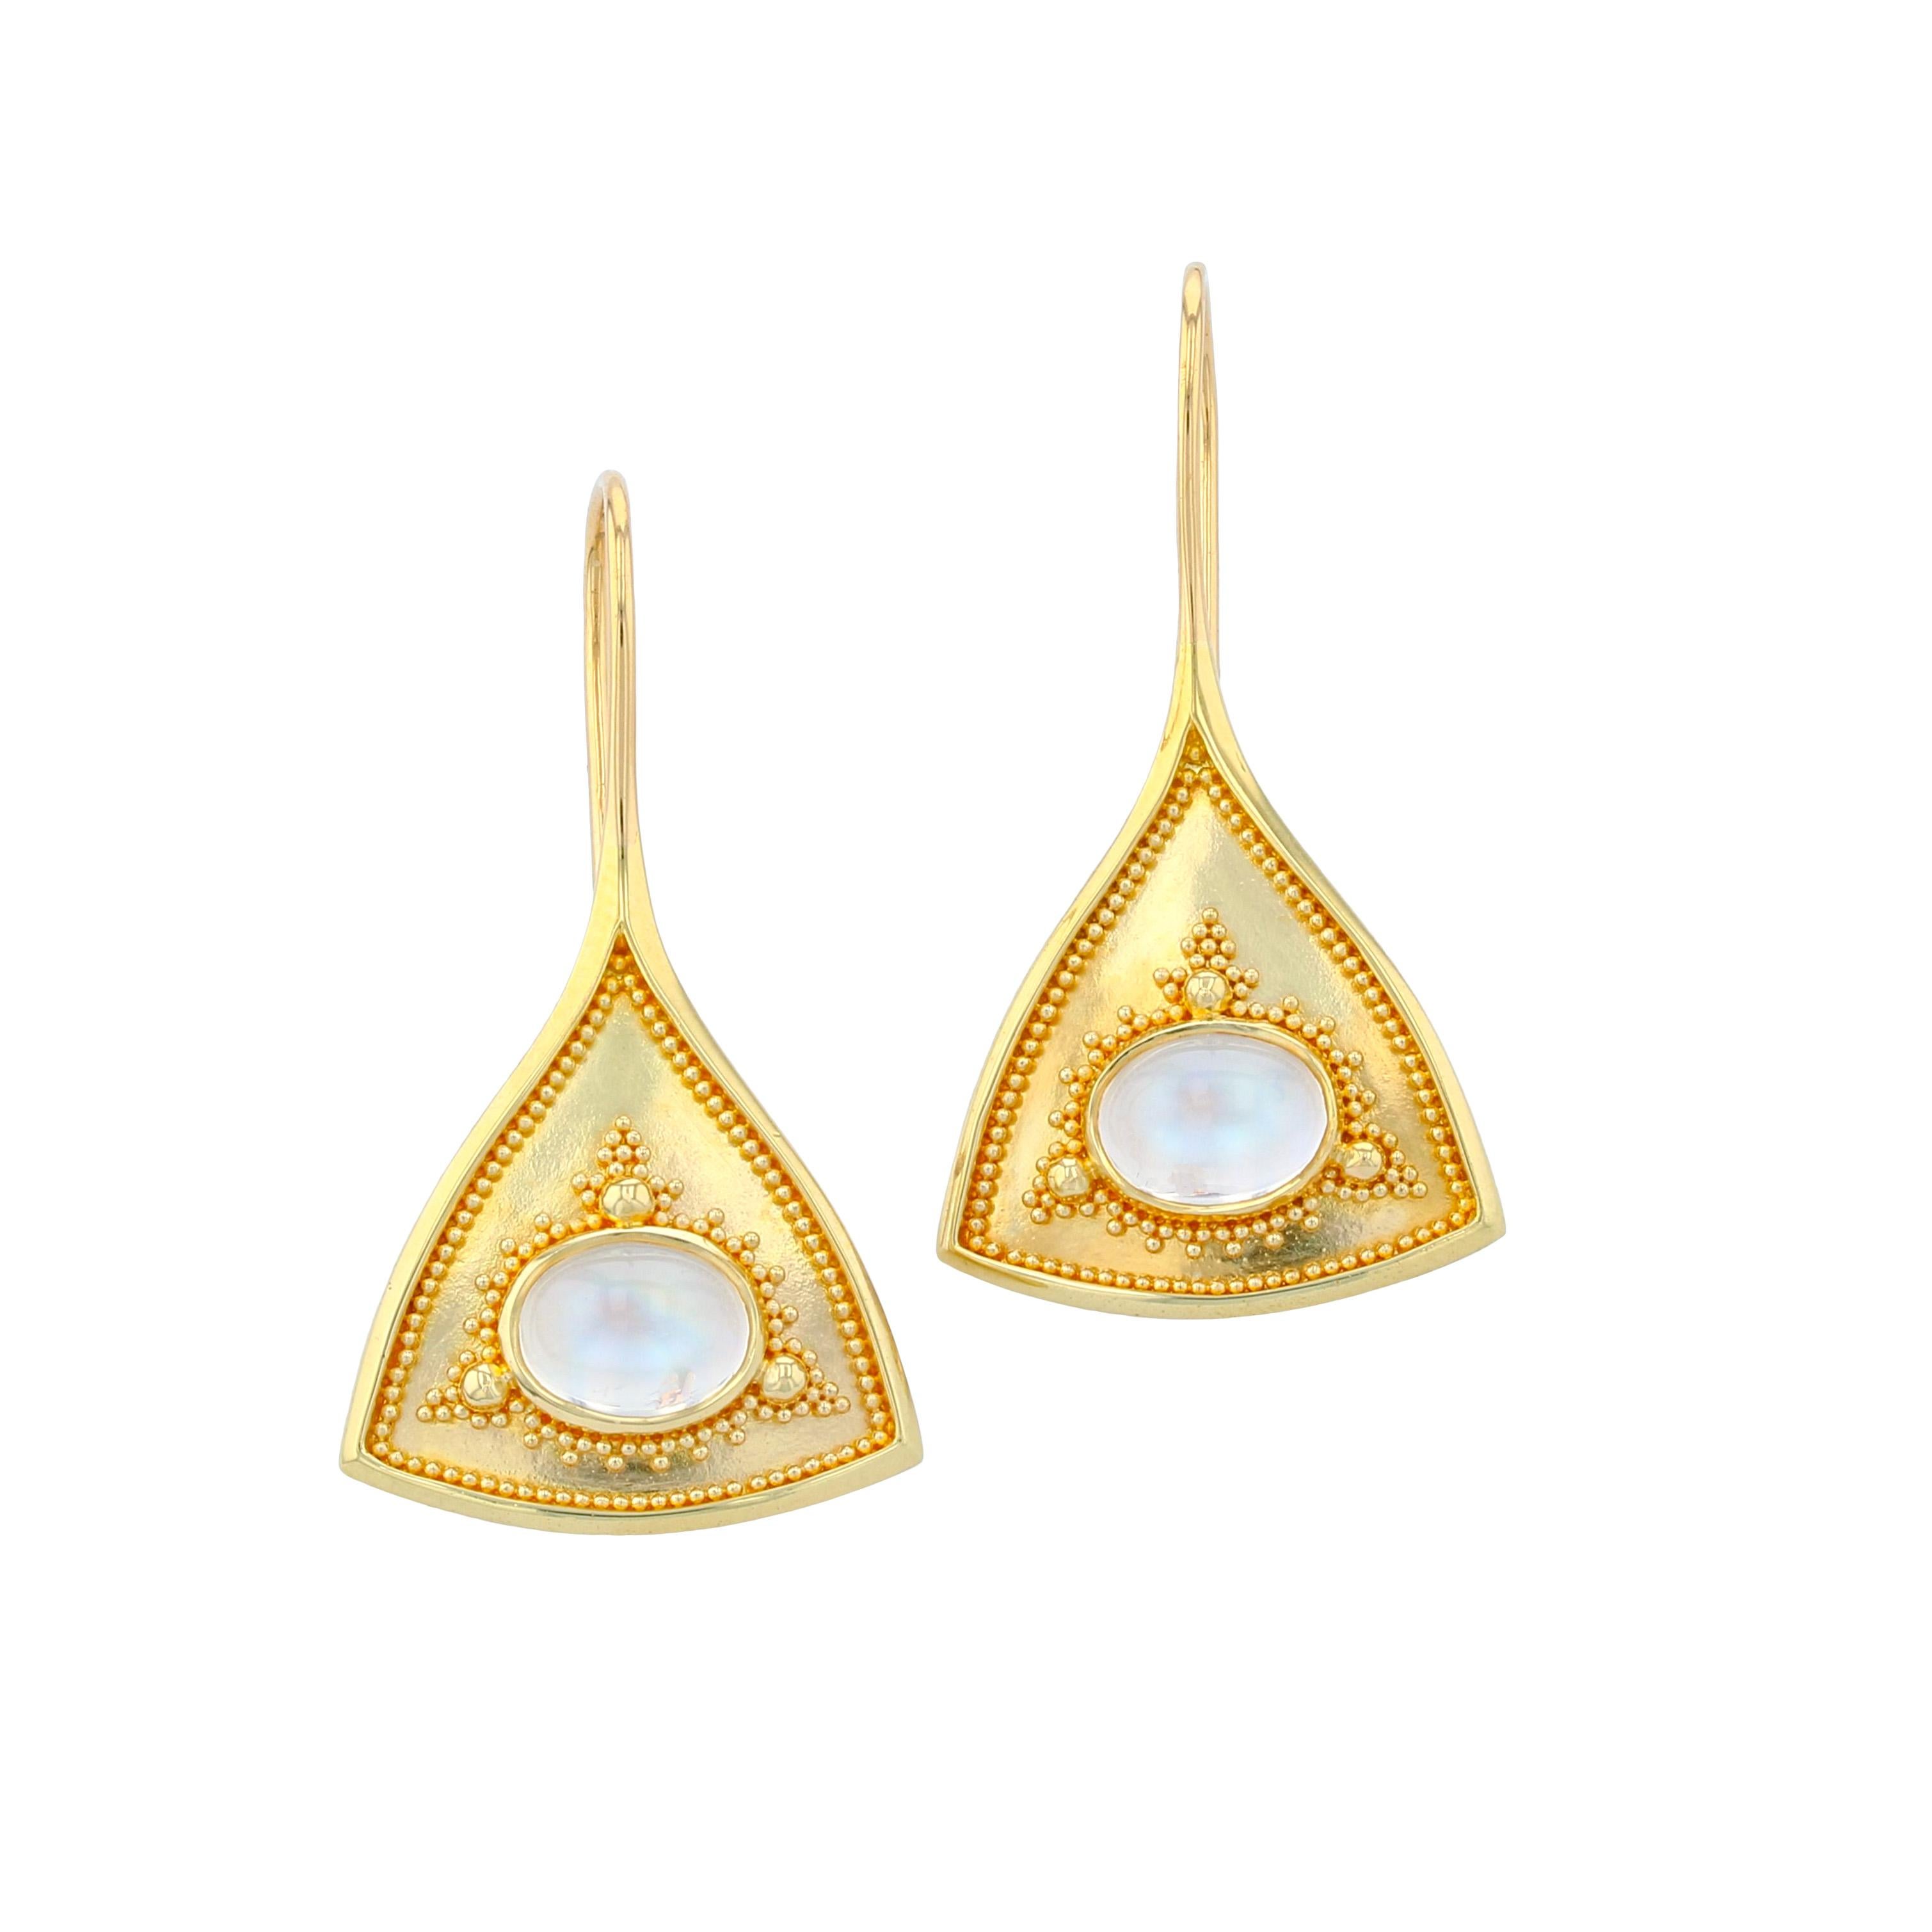 Artisan Kent Raible 18 Karat Gold Moonstone Drop Earrings with Gold Granulation